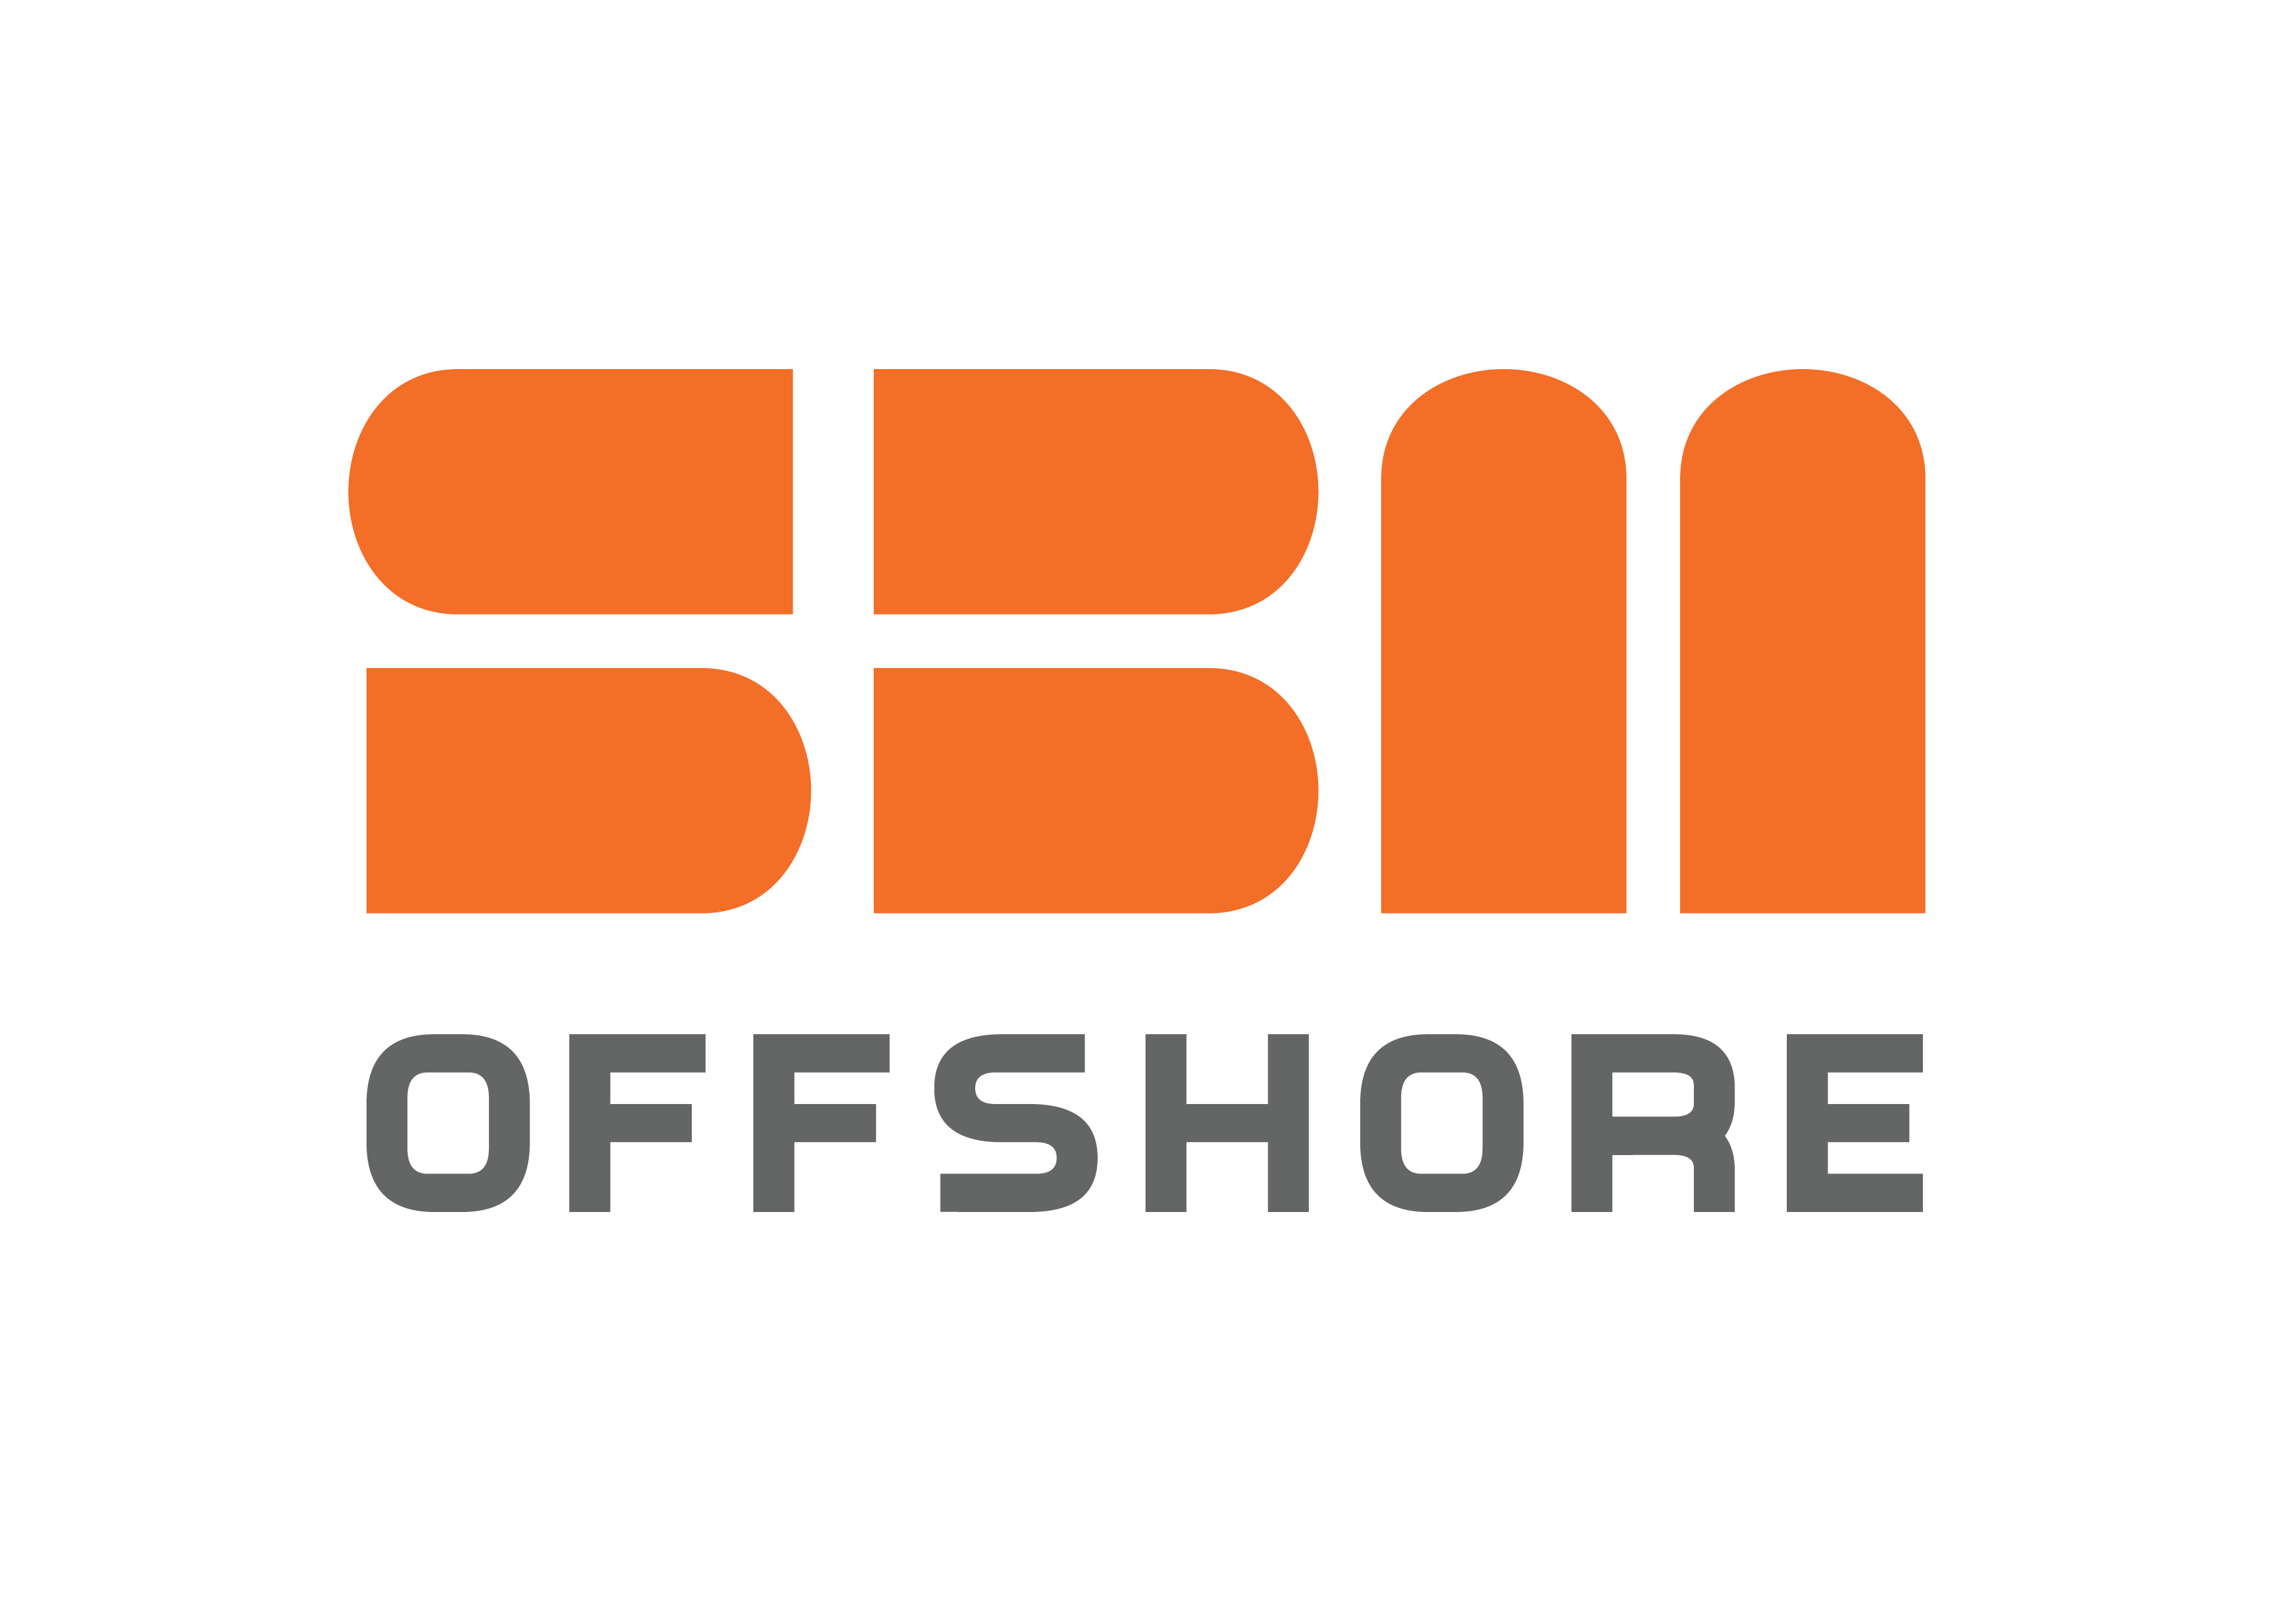 Tan Company Logo - Logos | Press Room | SBM Offshore